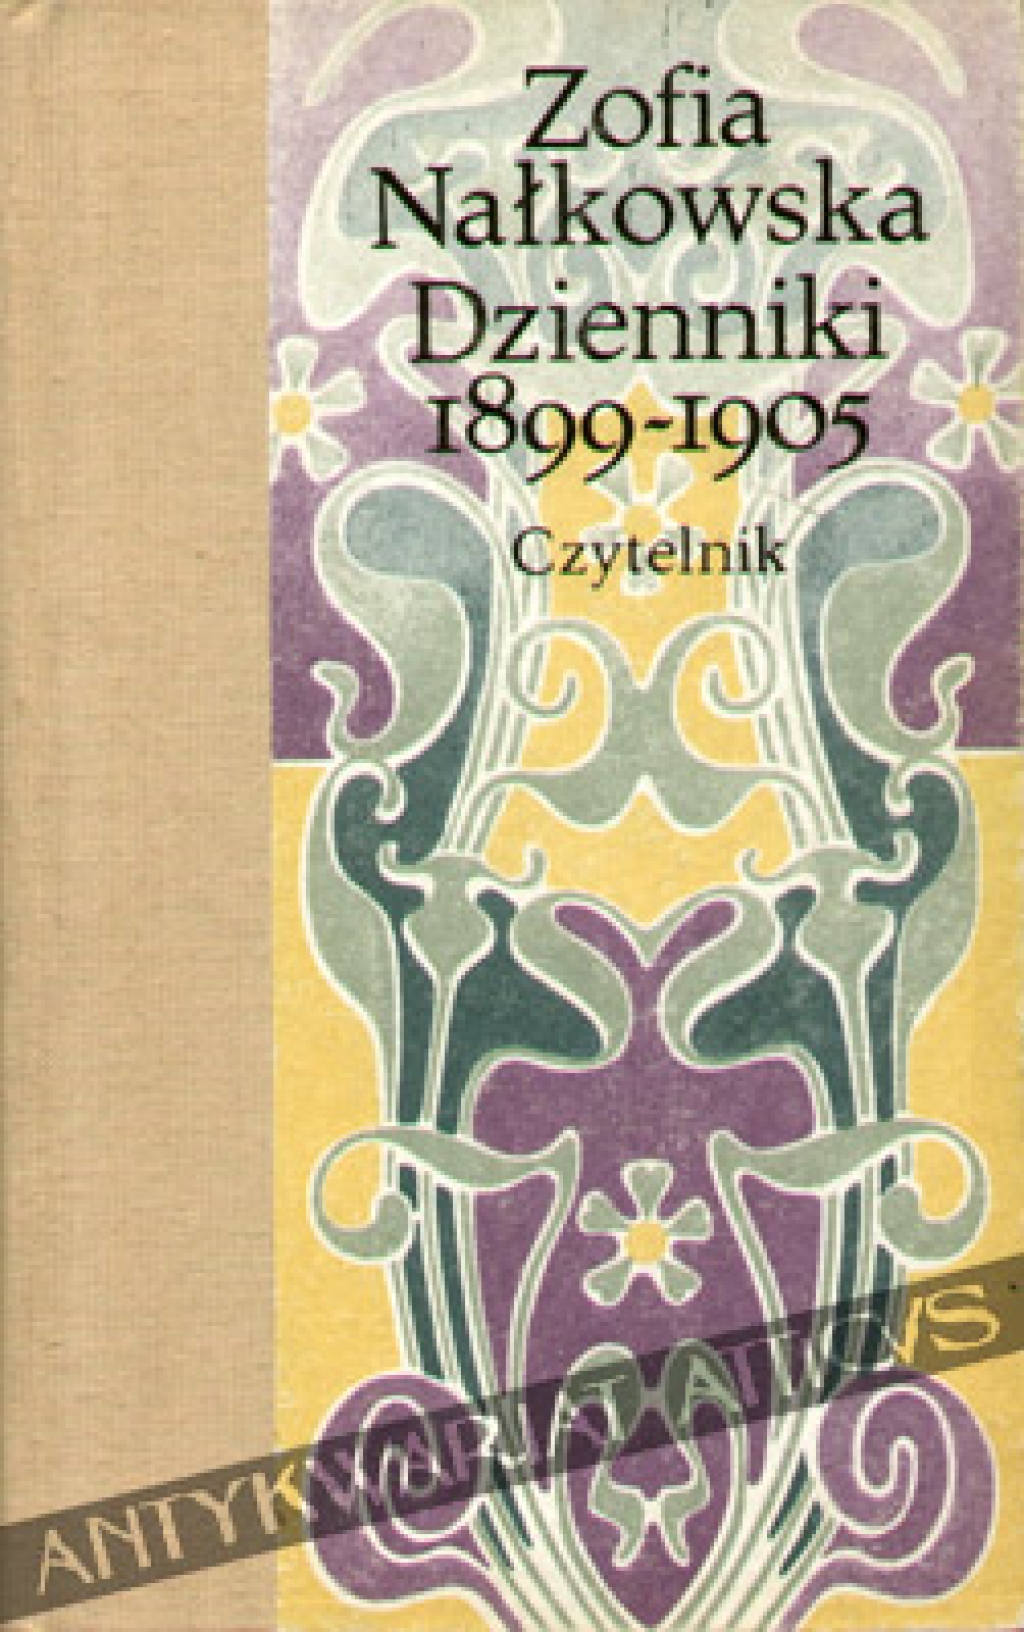 Dzienniki, t. I: 1899-1905